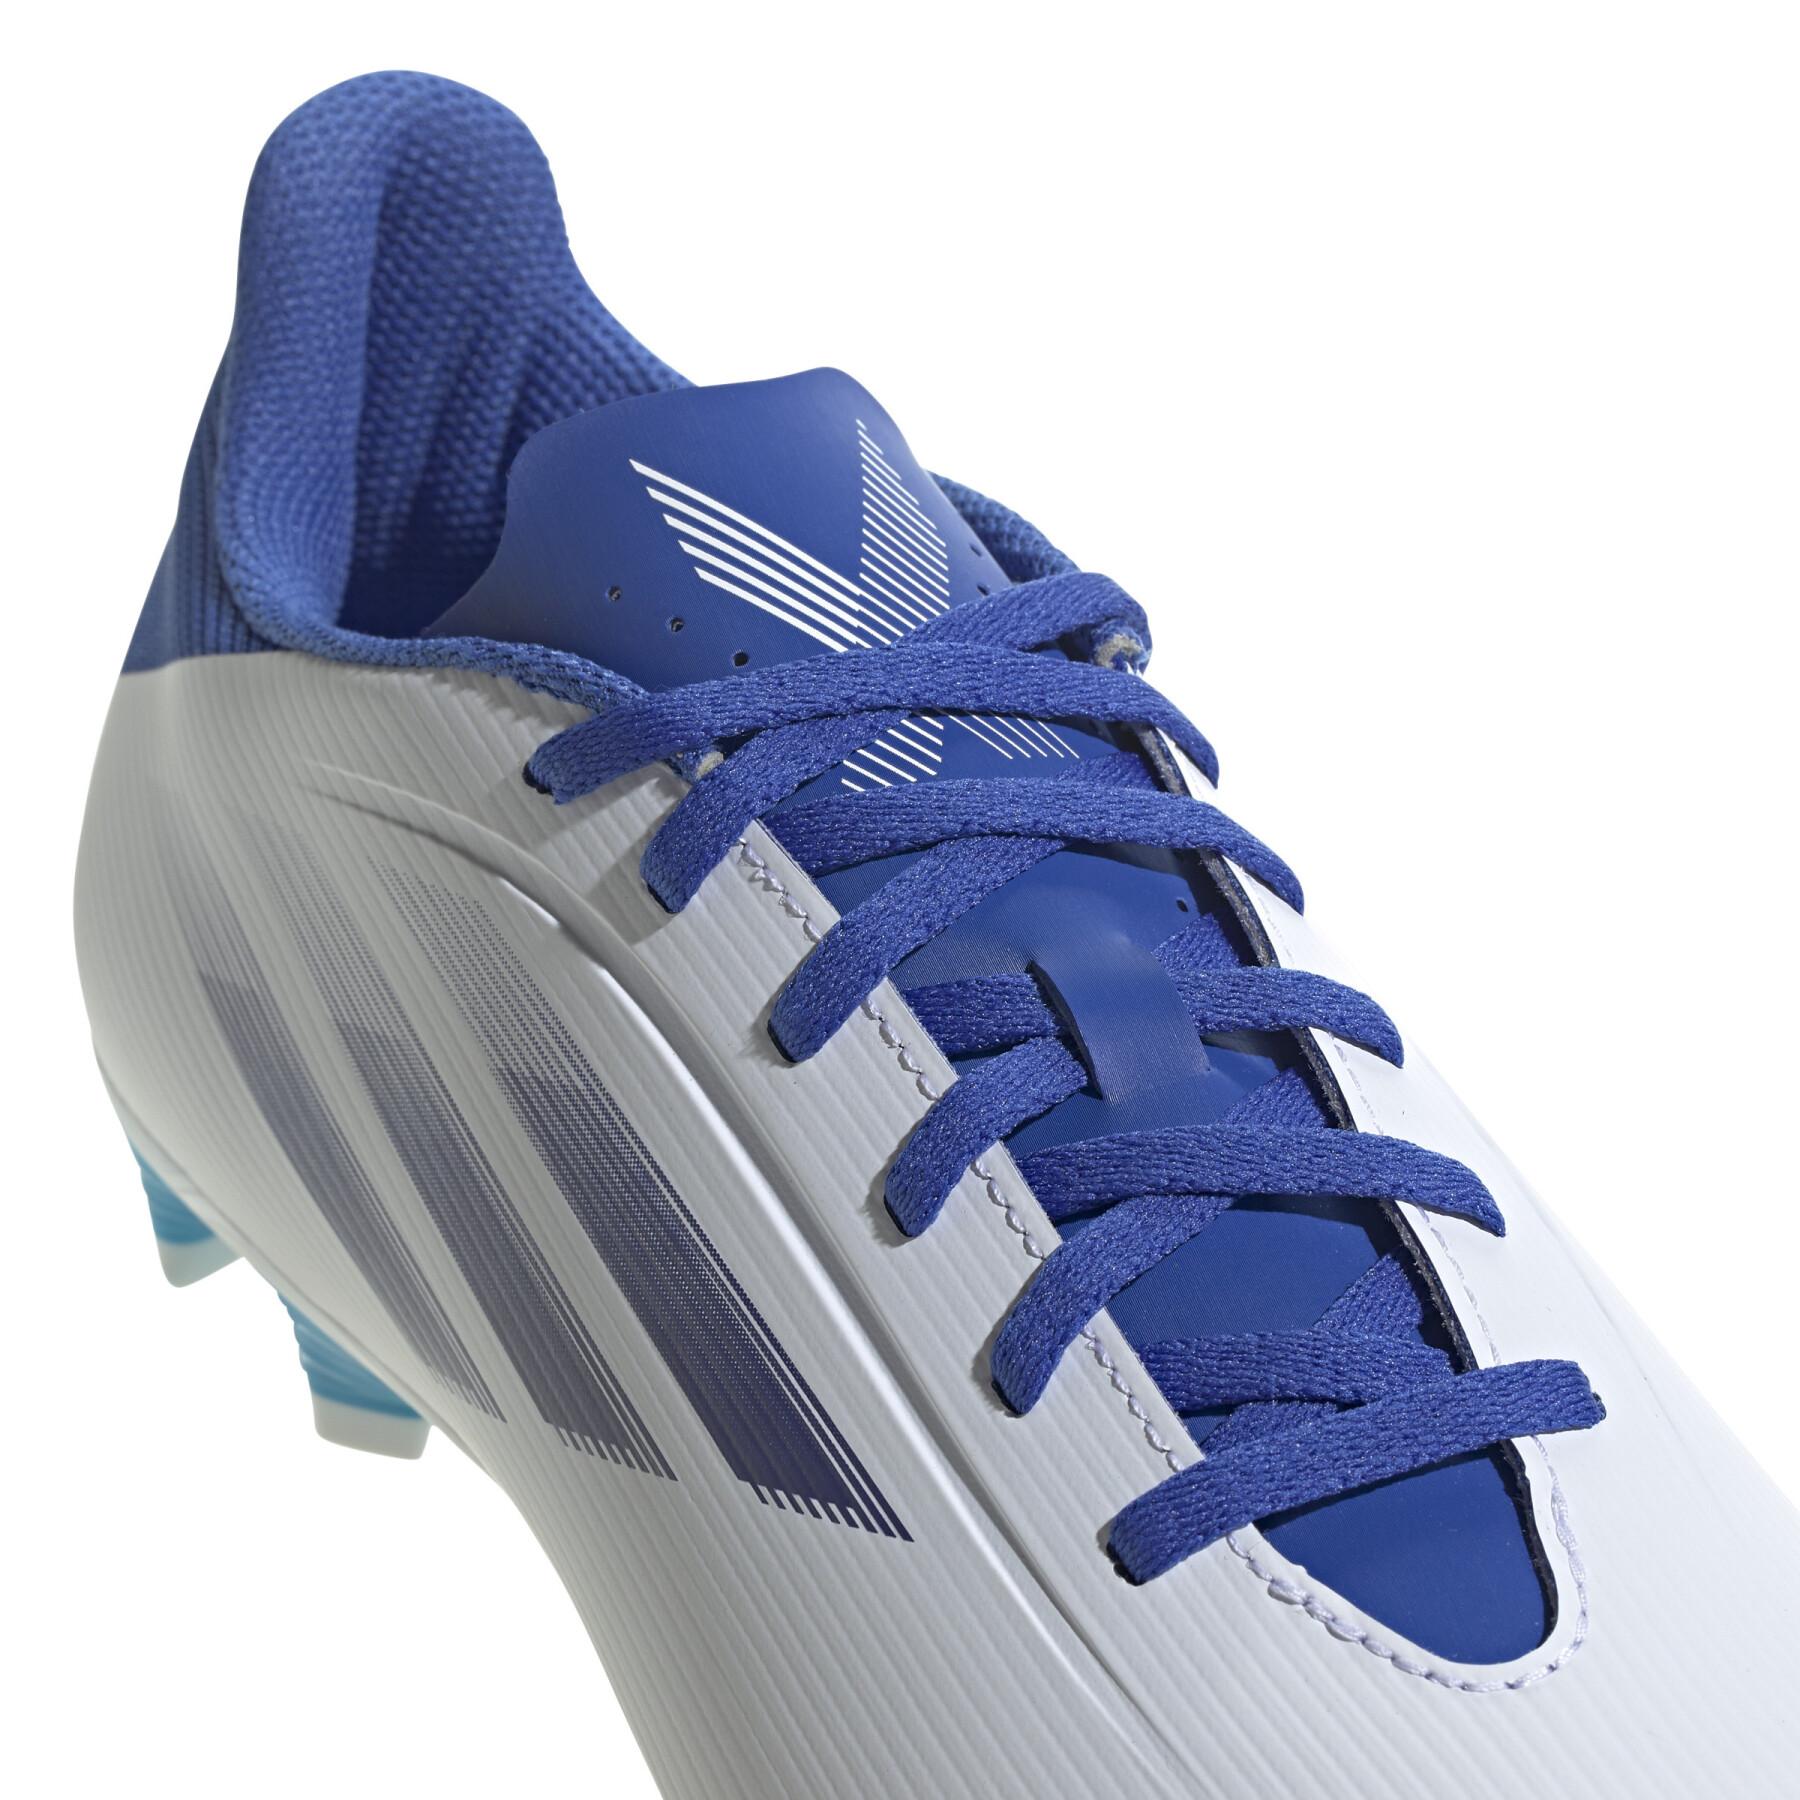 Chaussures de football adidas X Speedflow.4 MG